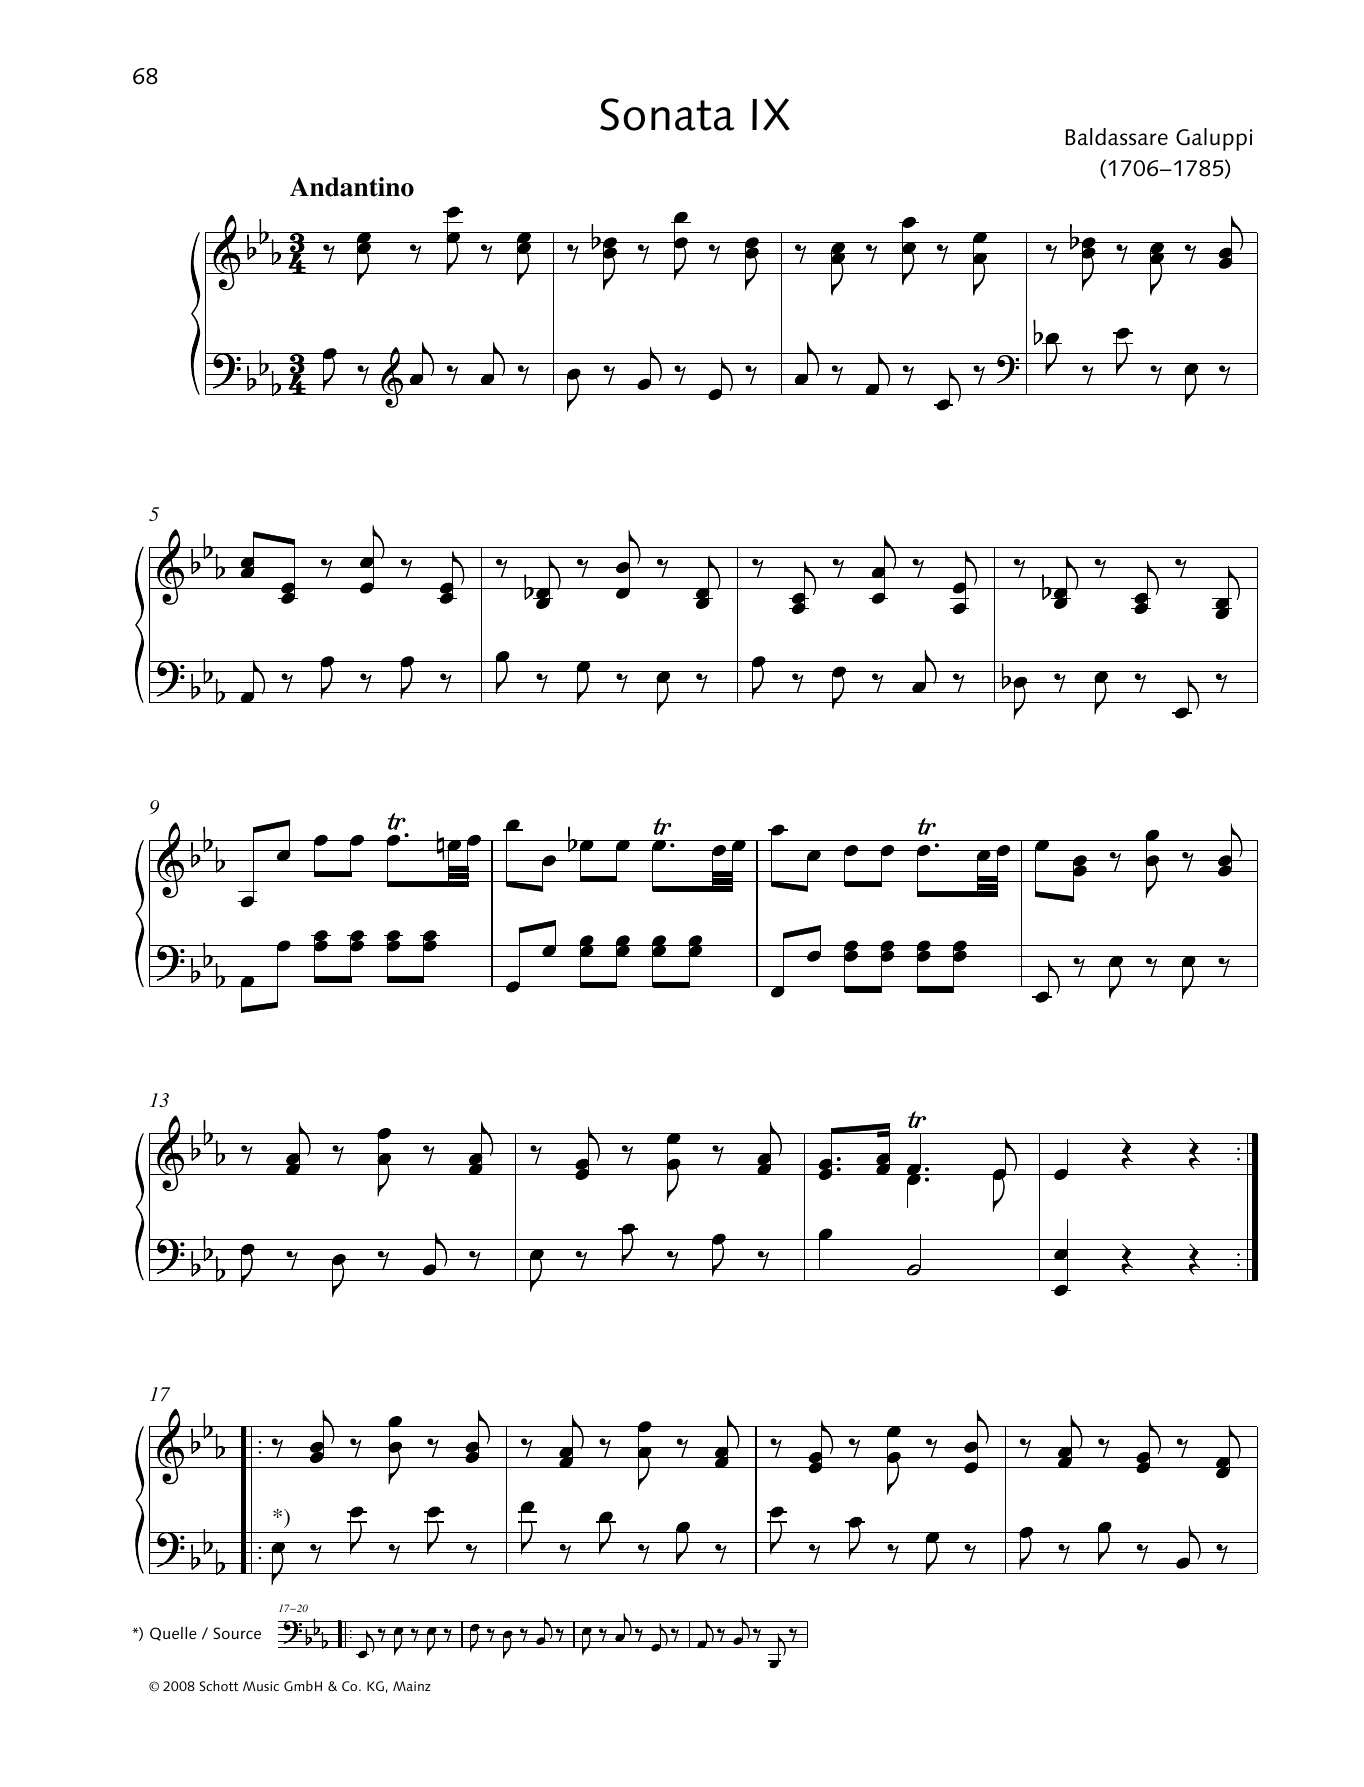 Baldassare Galuppi Sonata IX E-flat major Sheet Music Notes & Chords for Piano Solo - Download or Print PDF